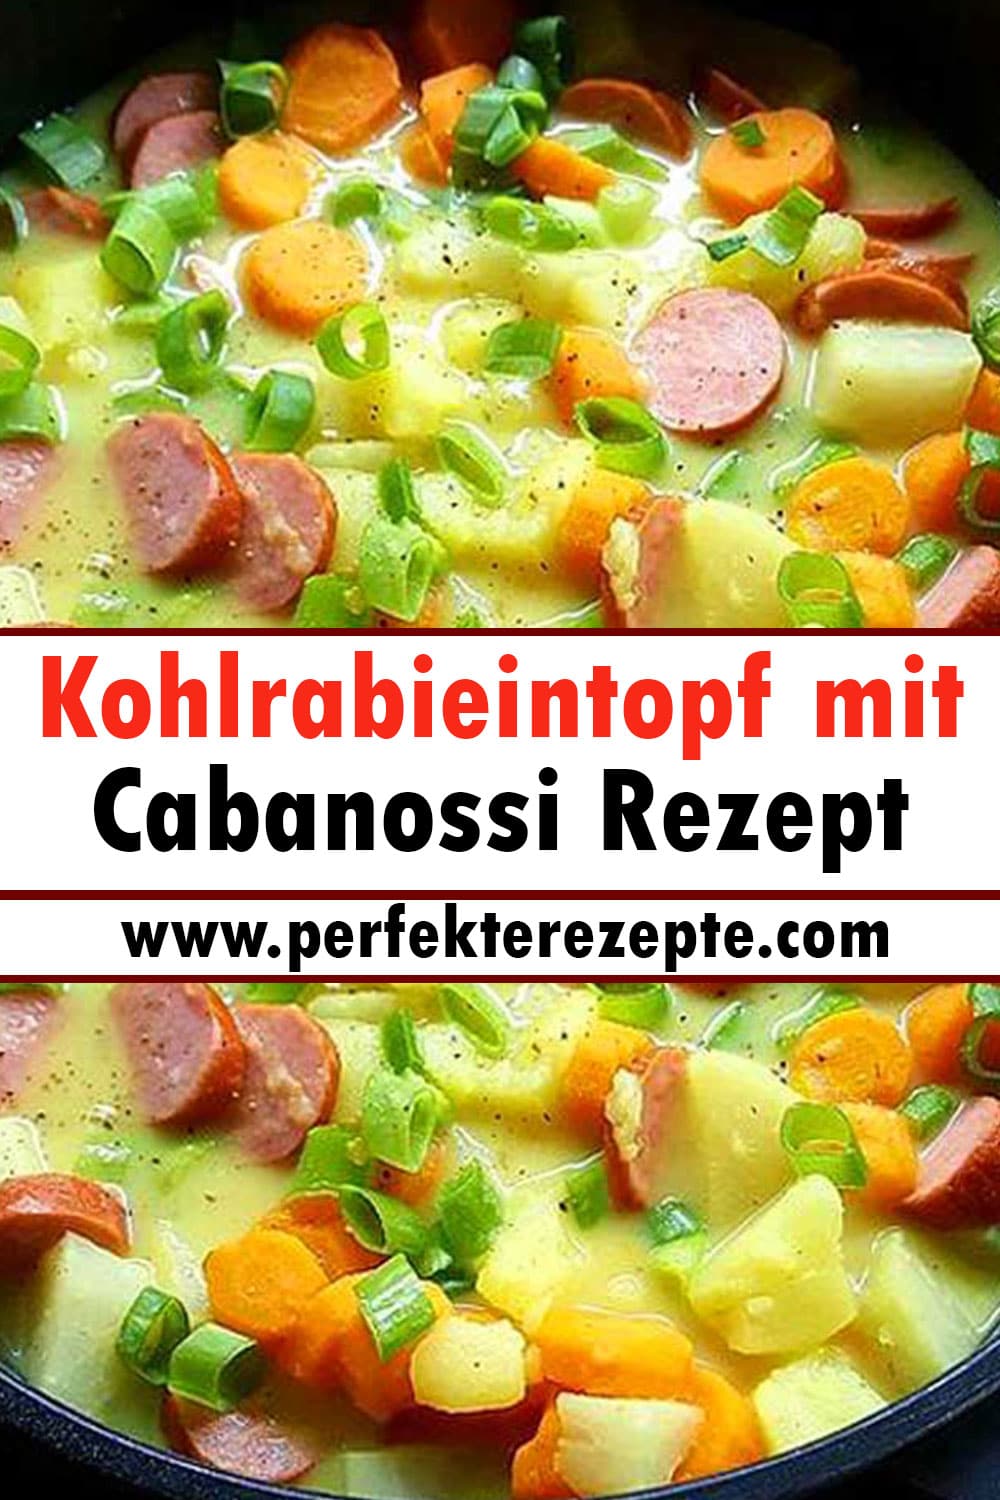 Kohlrabieintopf mit Cabanossi Rezept